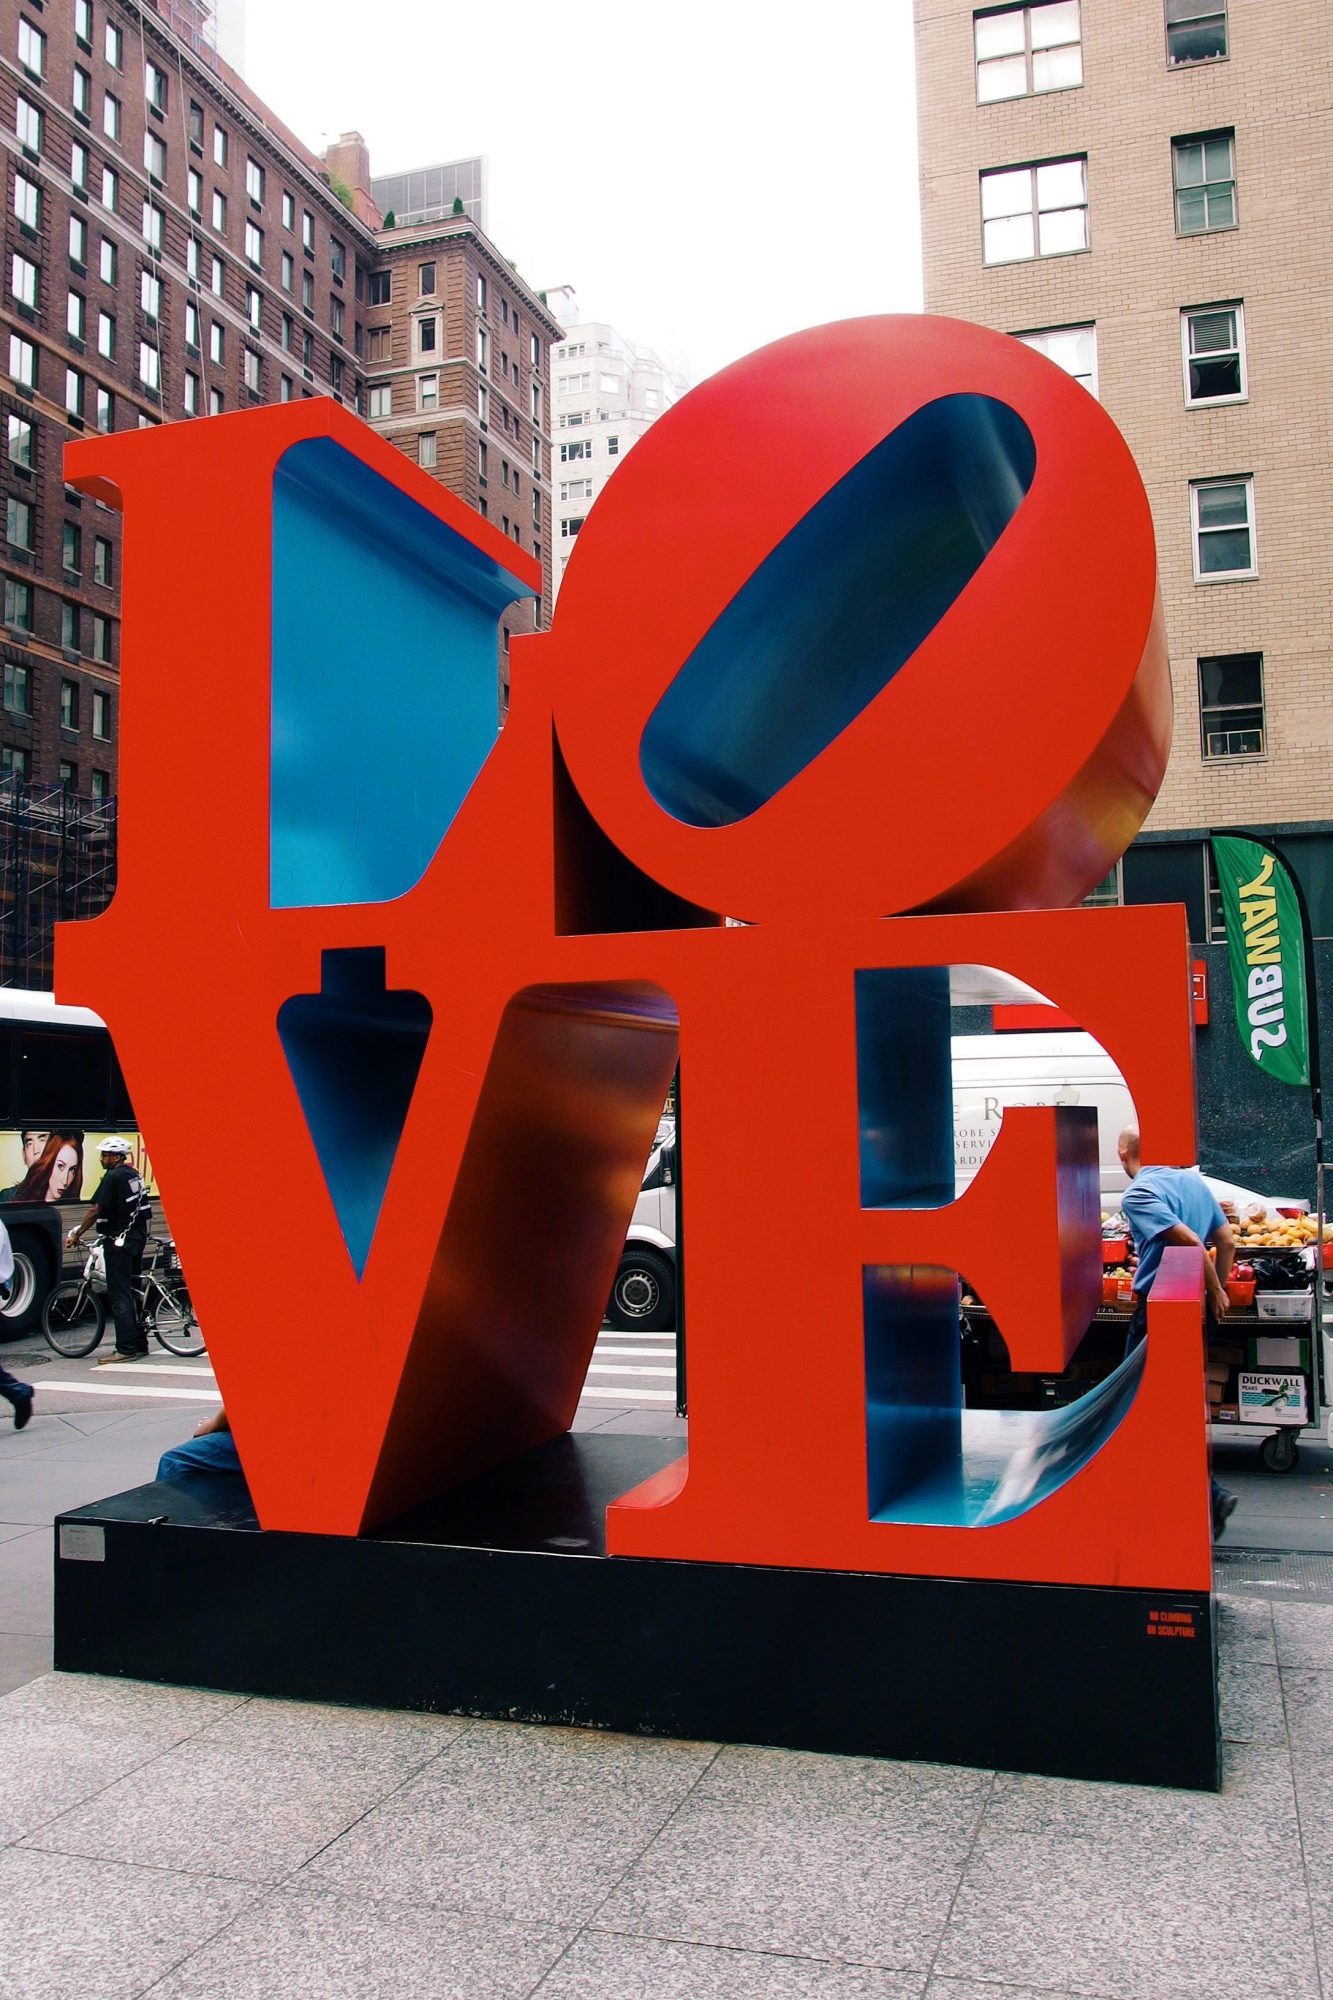 New York love plaza sign